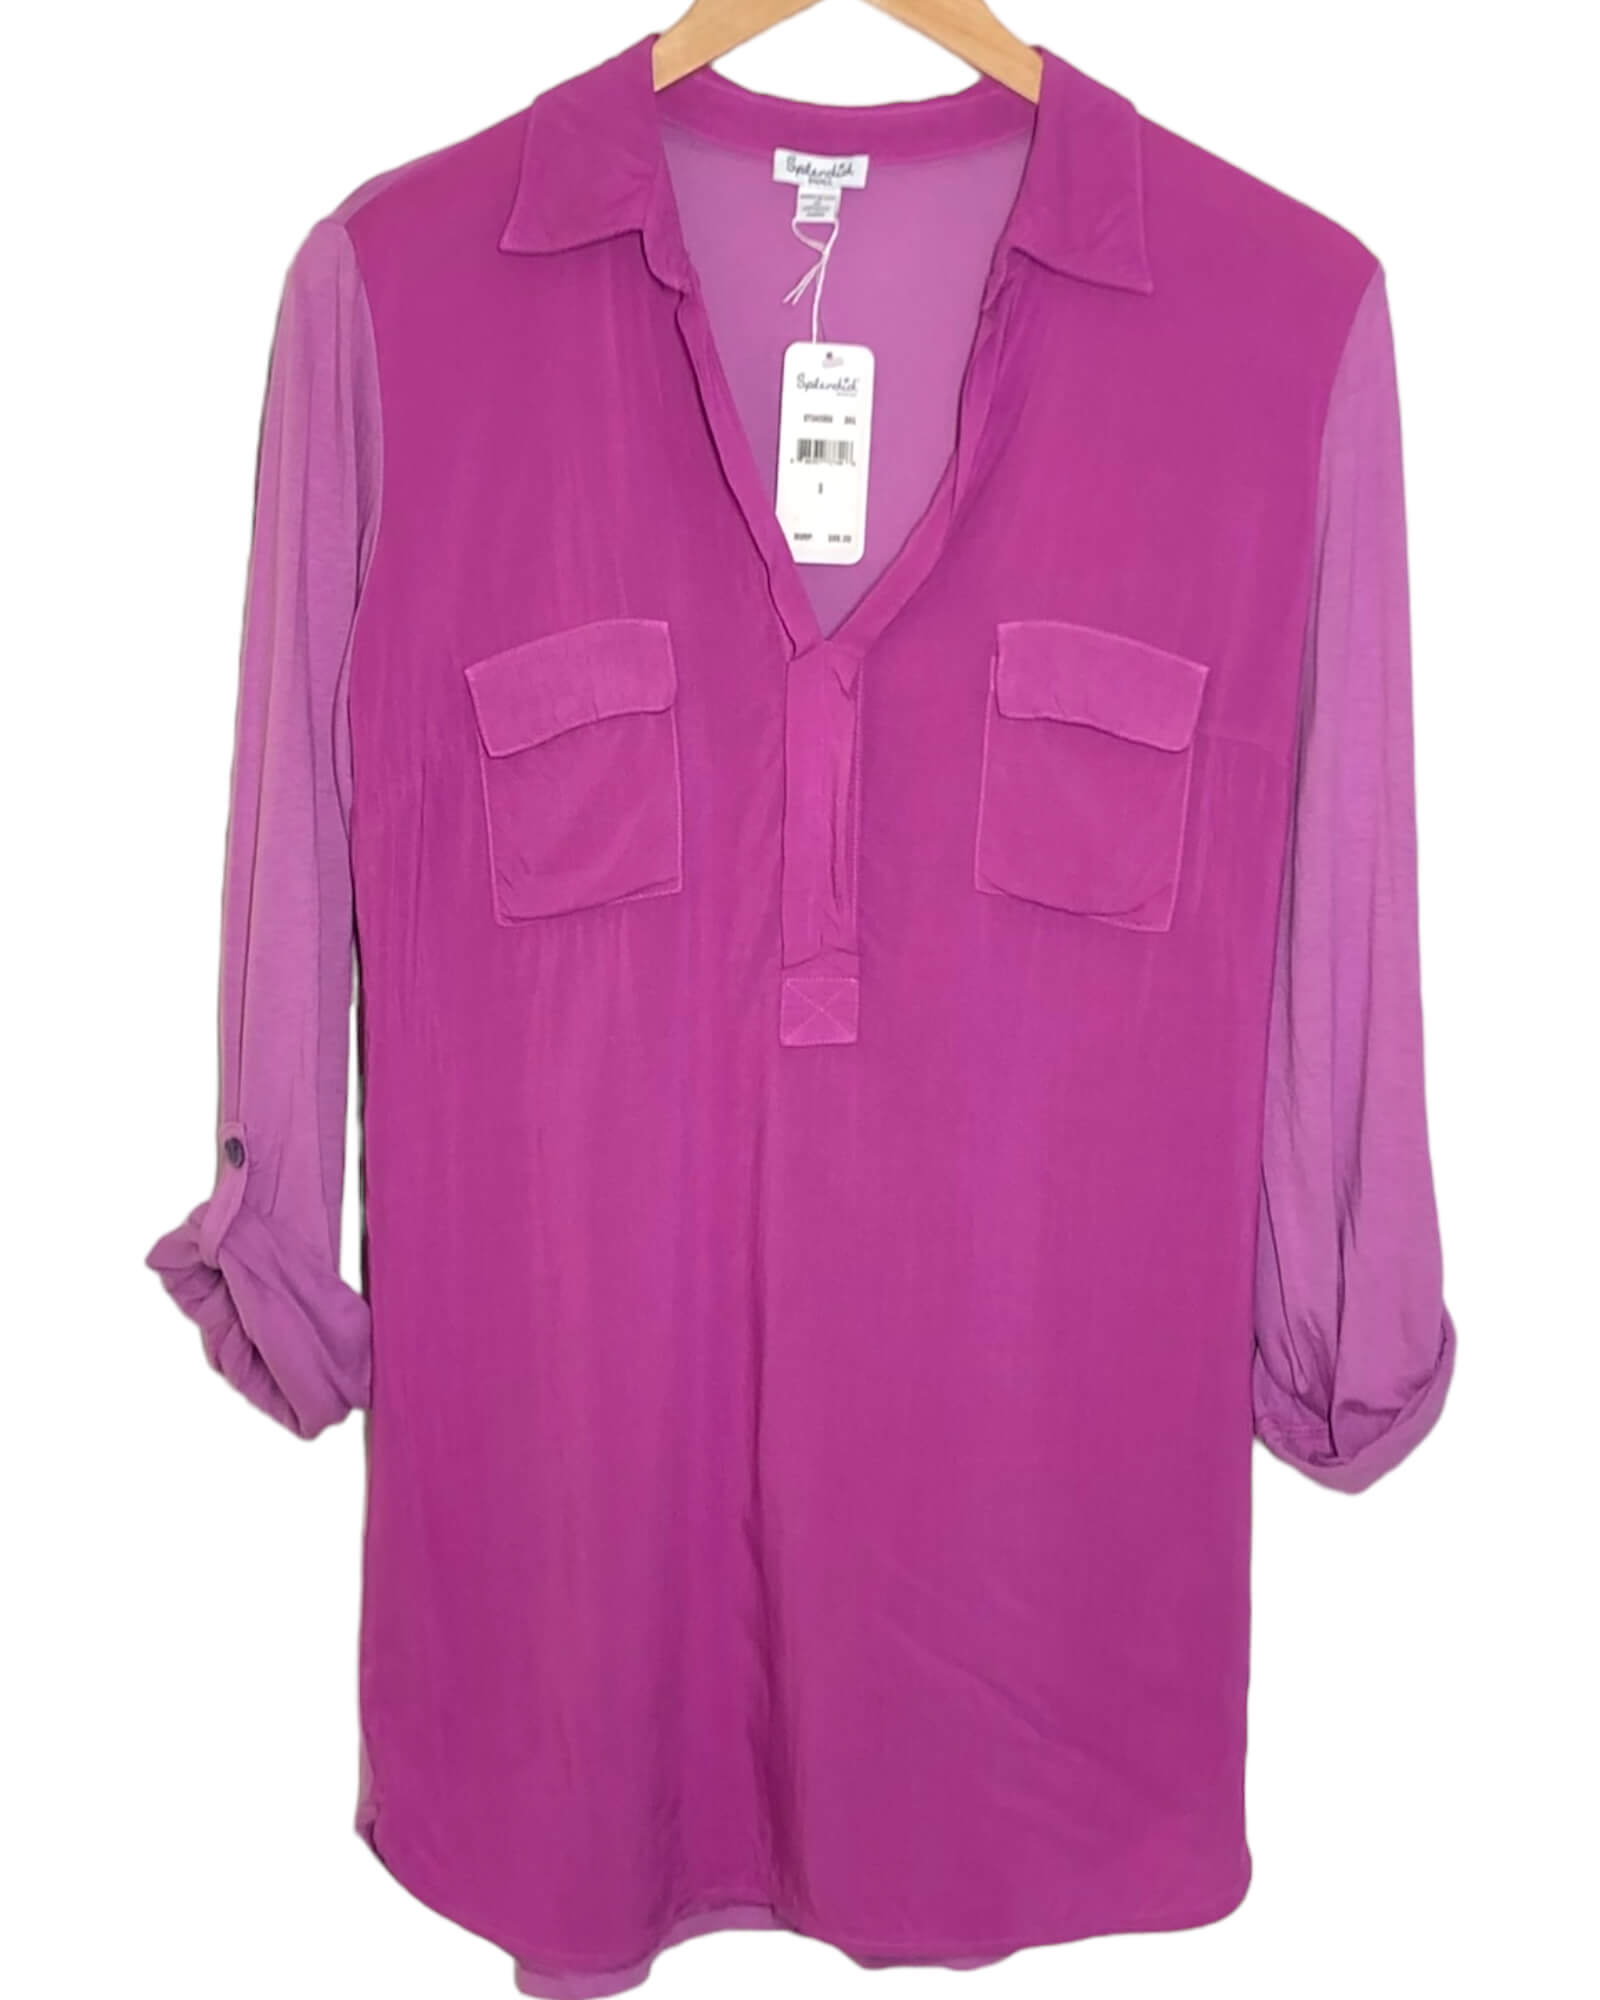 Cool Summer SPLENDID wild aster purple tab sleeve shirt